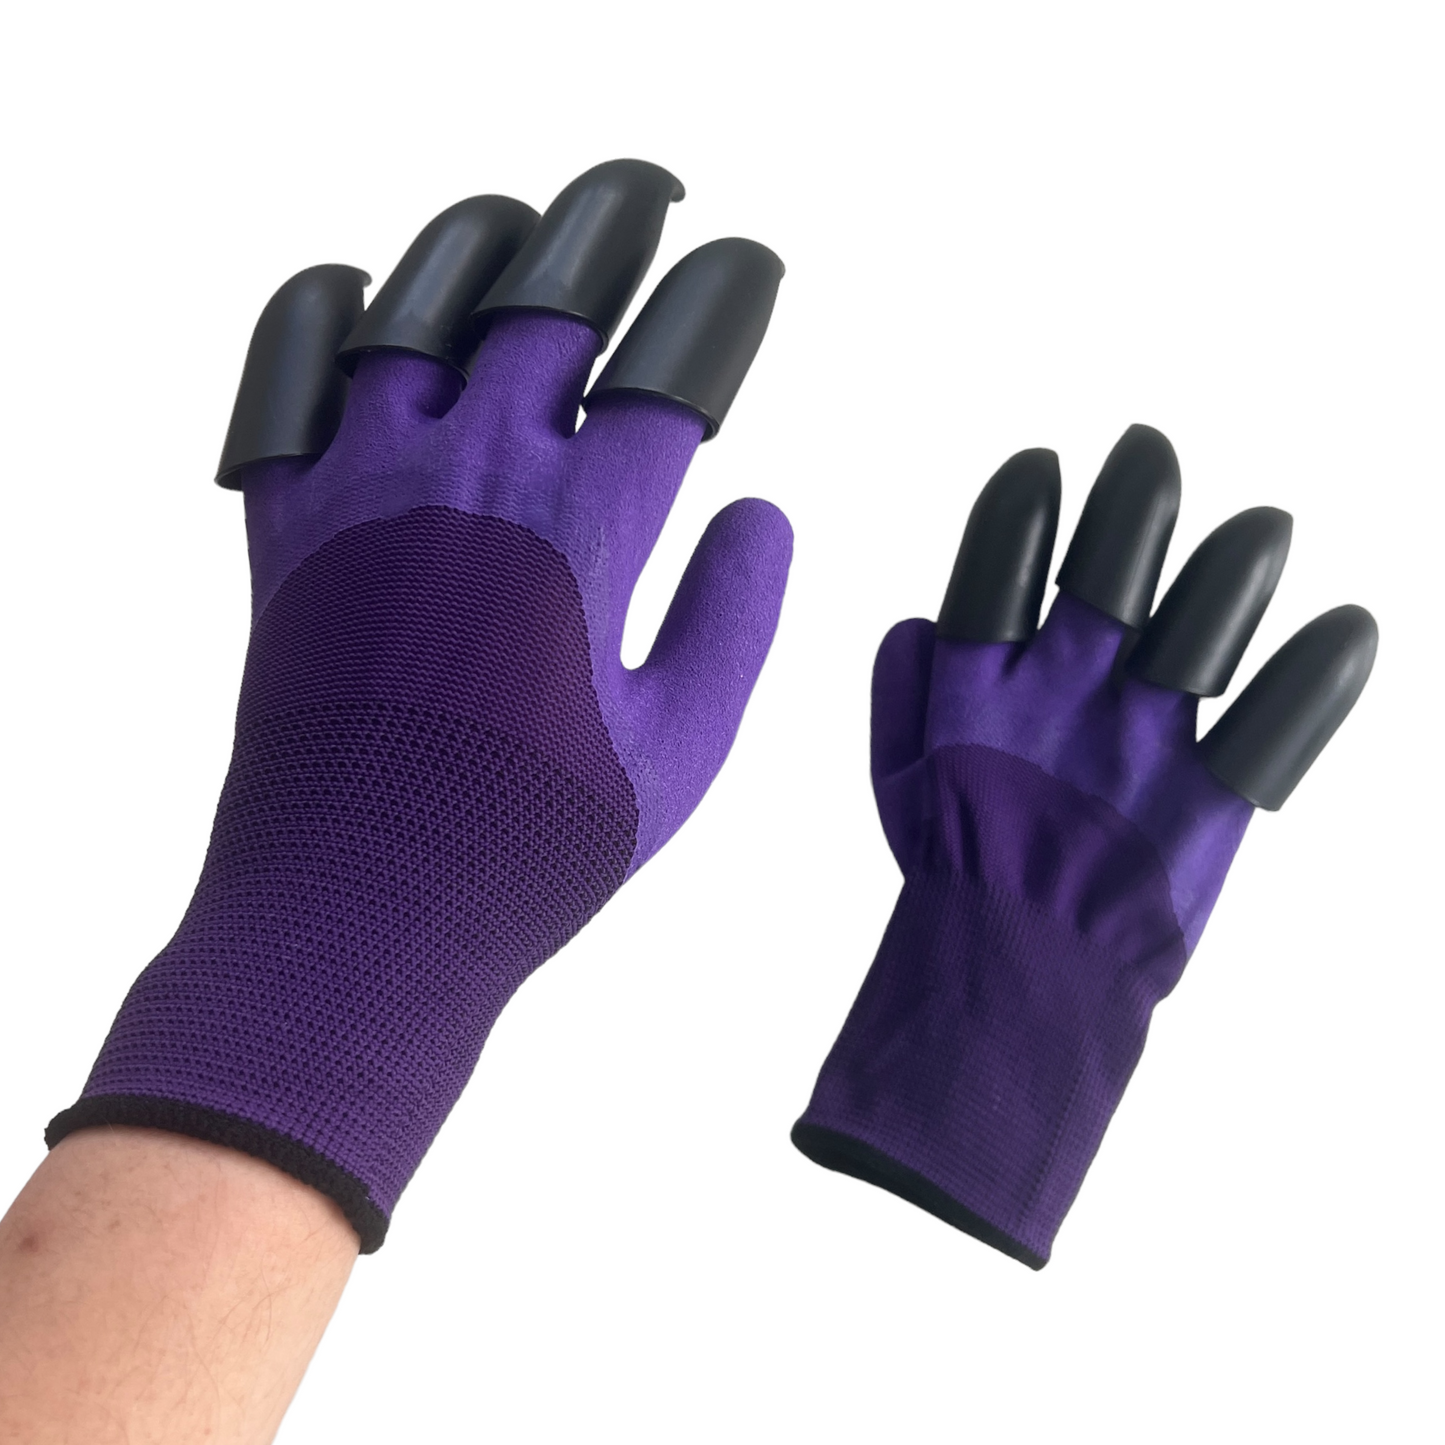 Garden Gloves With Claws